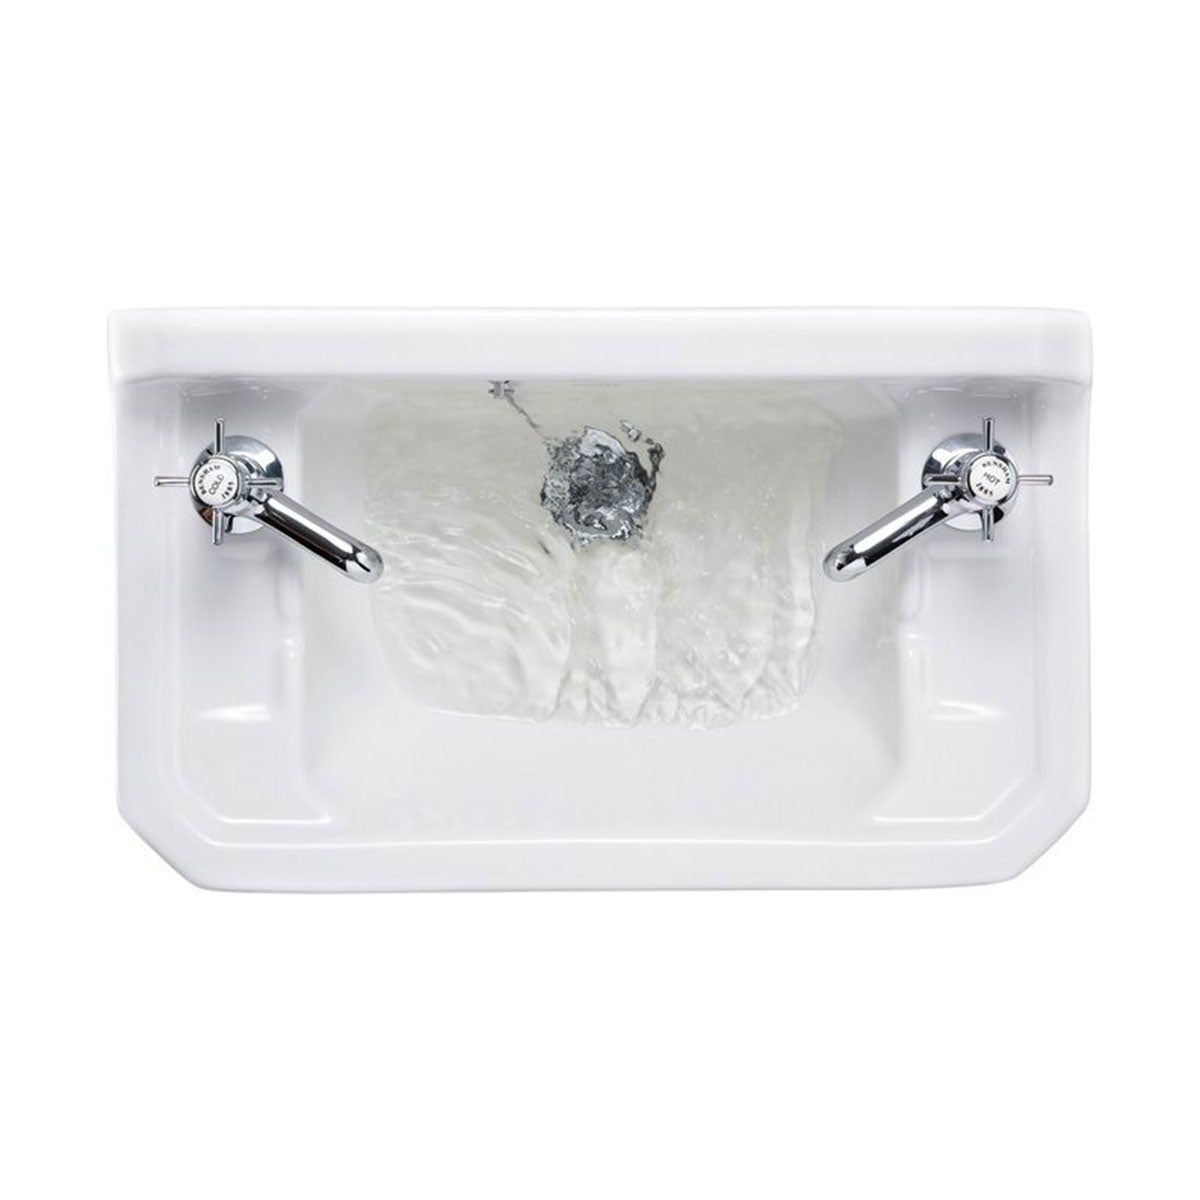 Burlington Edwardian 510 Cloakroom Washbasin Rectangular 2 Taps Top View Deluxe Bathrooms UK